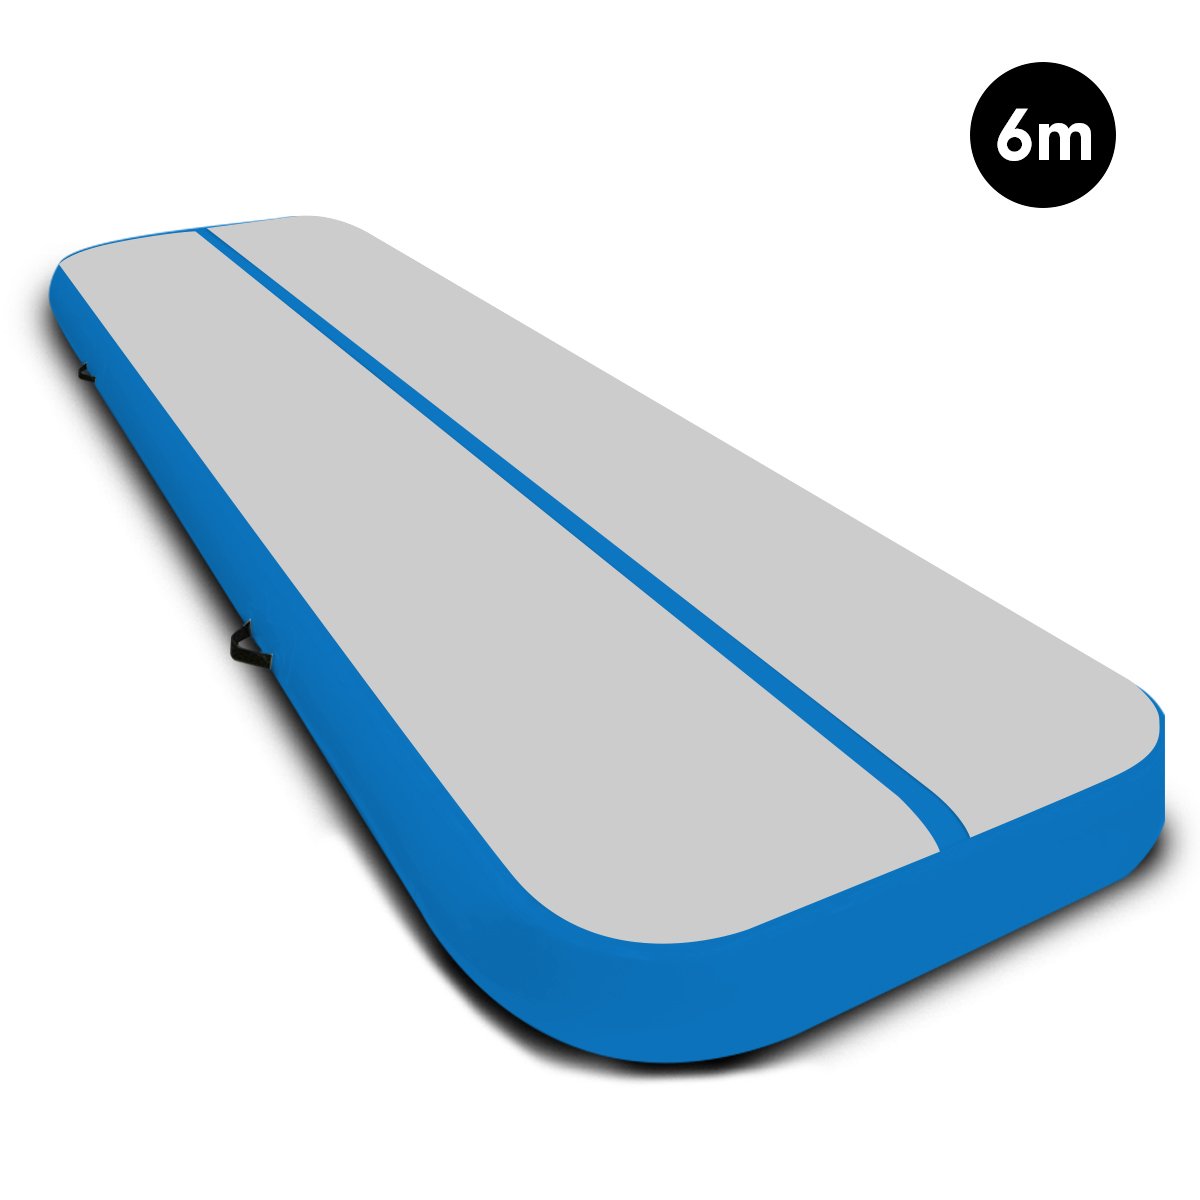 6m x 2m Air Track Gymnastics Mat Tumbling Exercise - Grey Blue 1